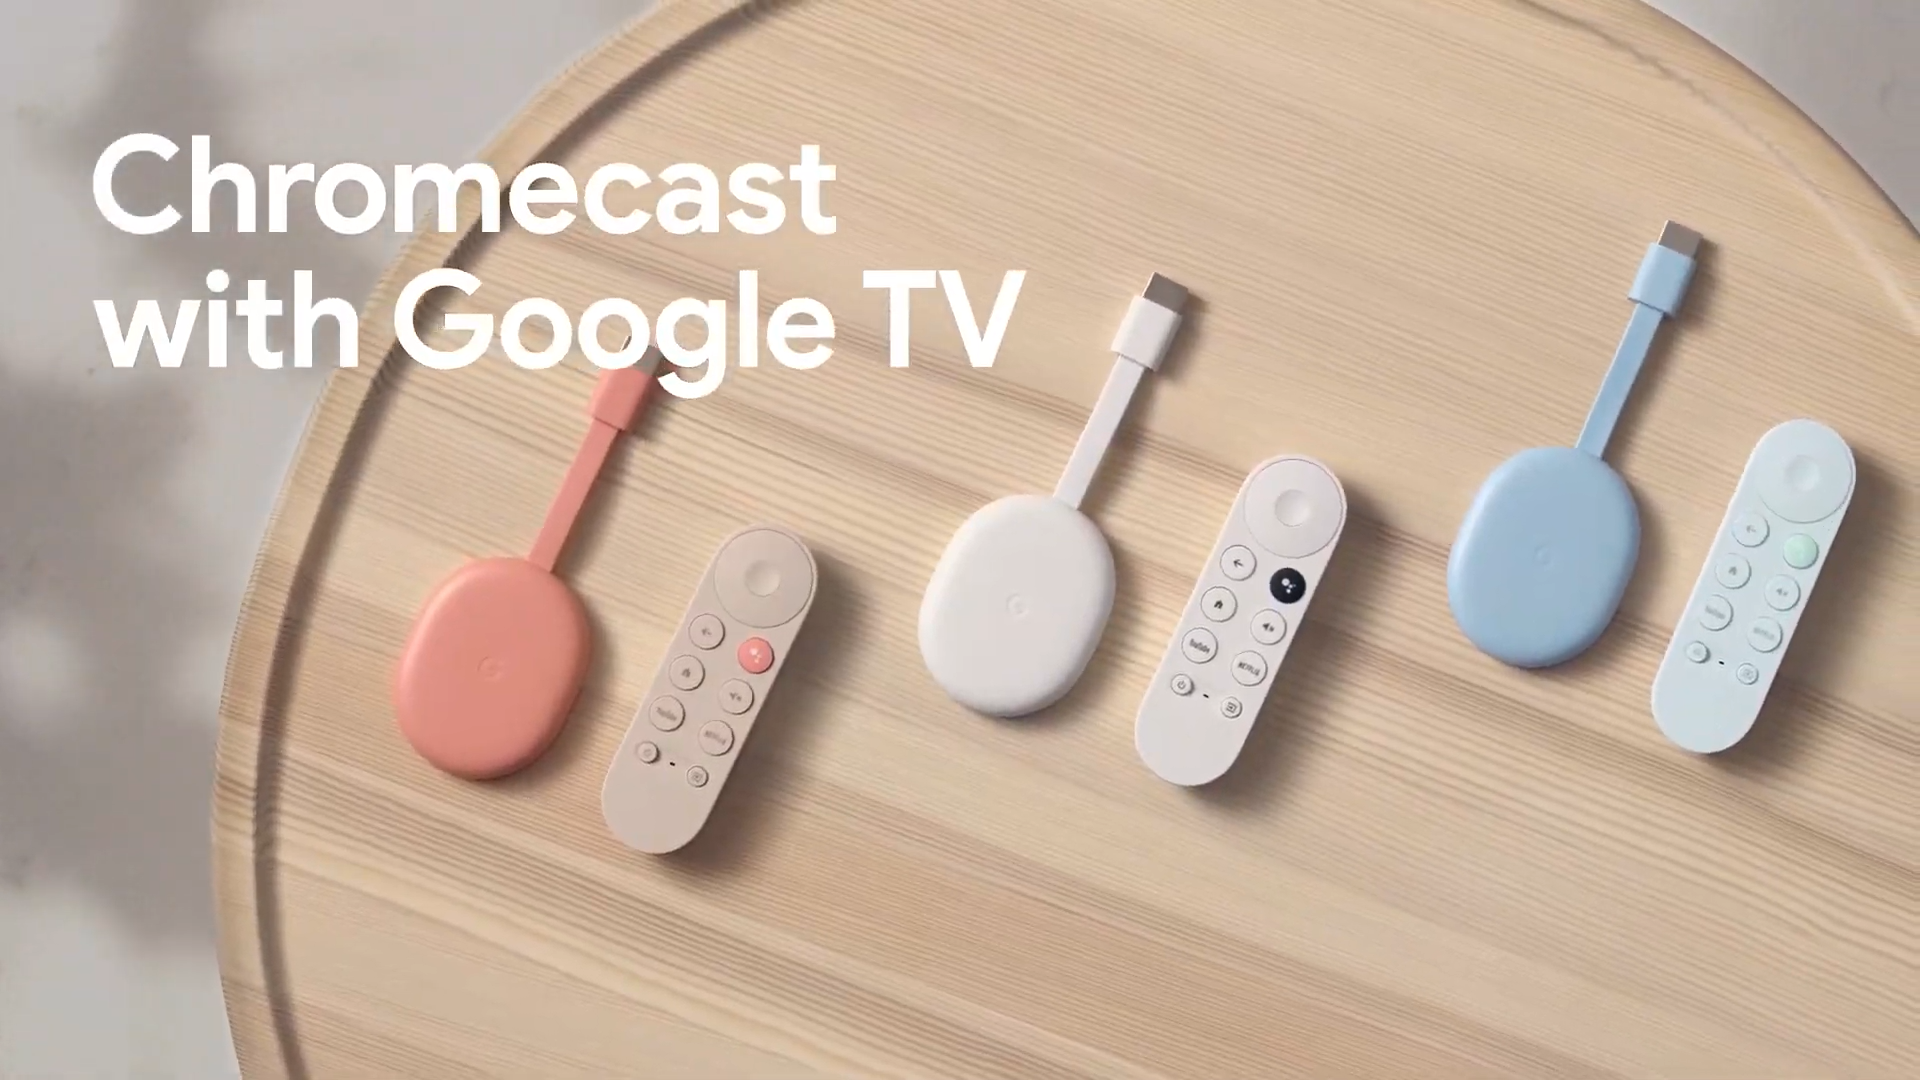 Google Chromecast รุ่นใหม่ มาพร้อมระบบ Google TV และรีโมตสั่งงานด้วยเสียง เปิดราคาราว 1,570 บาท